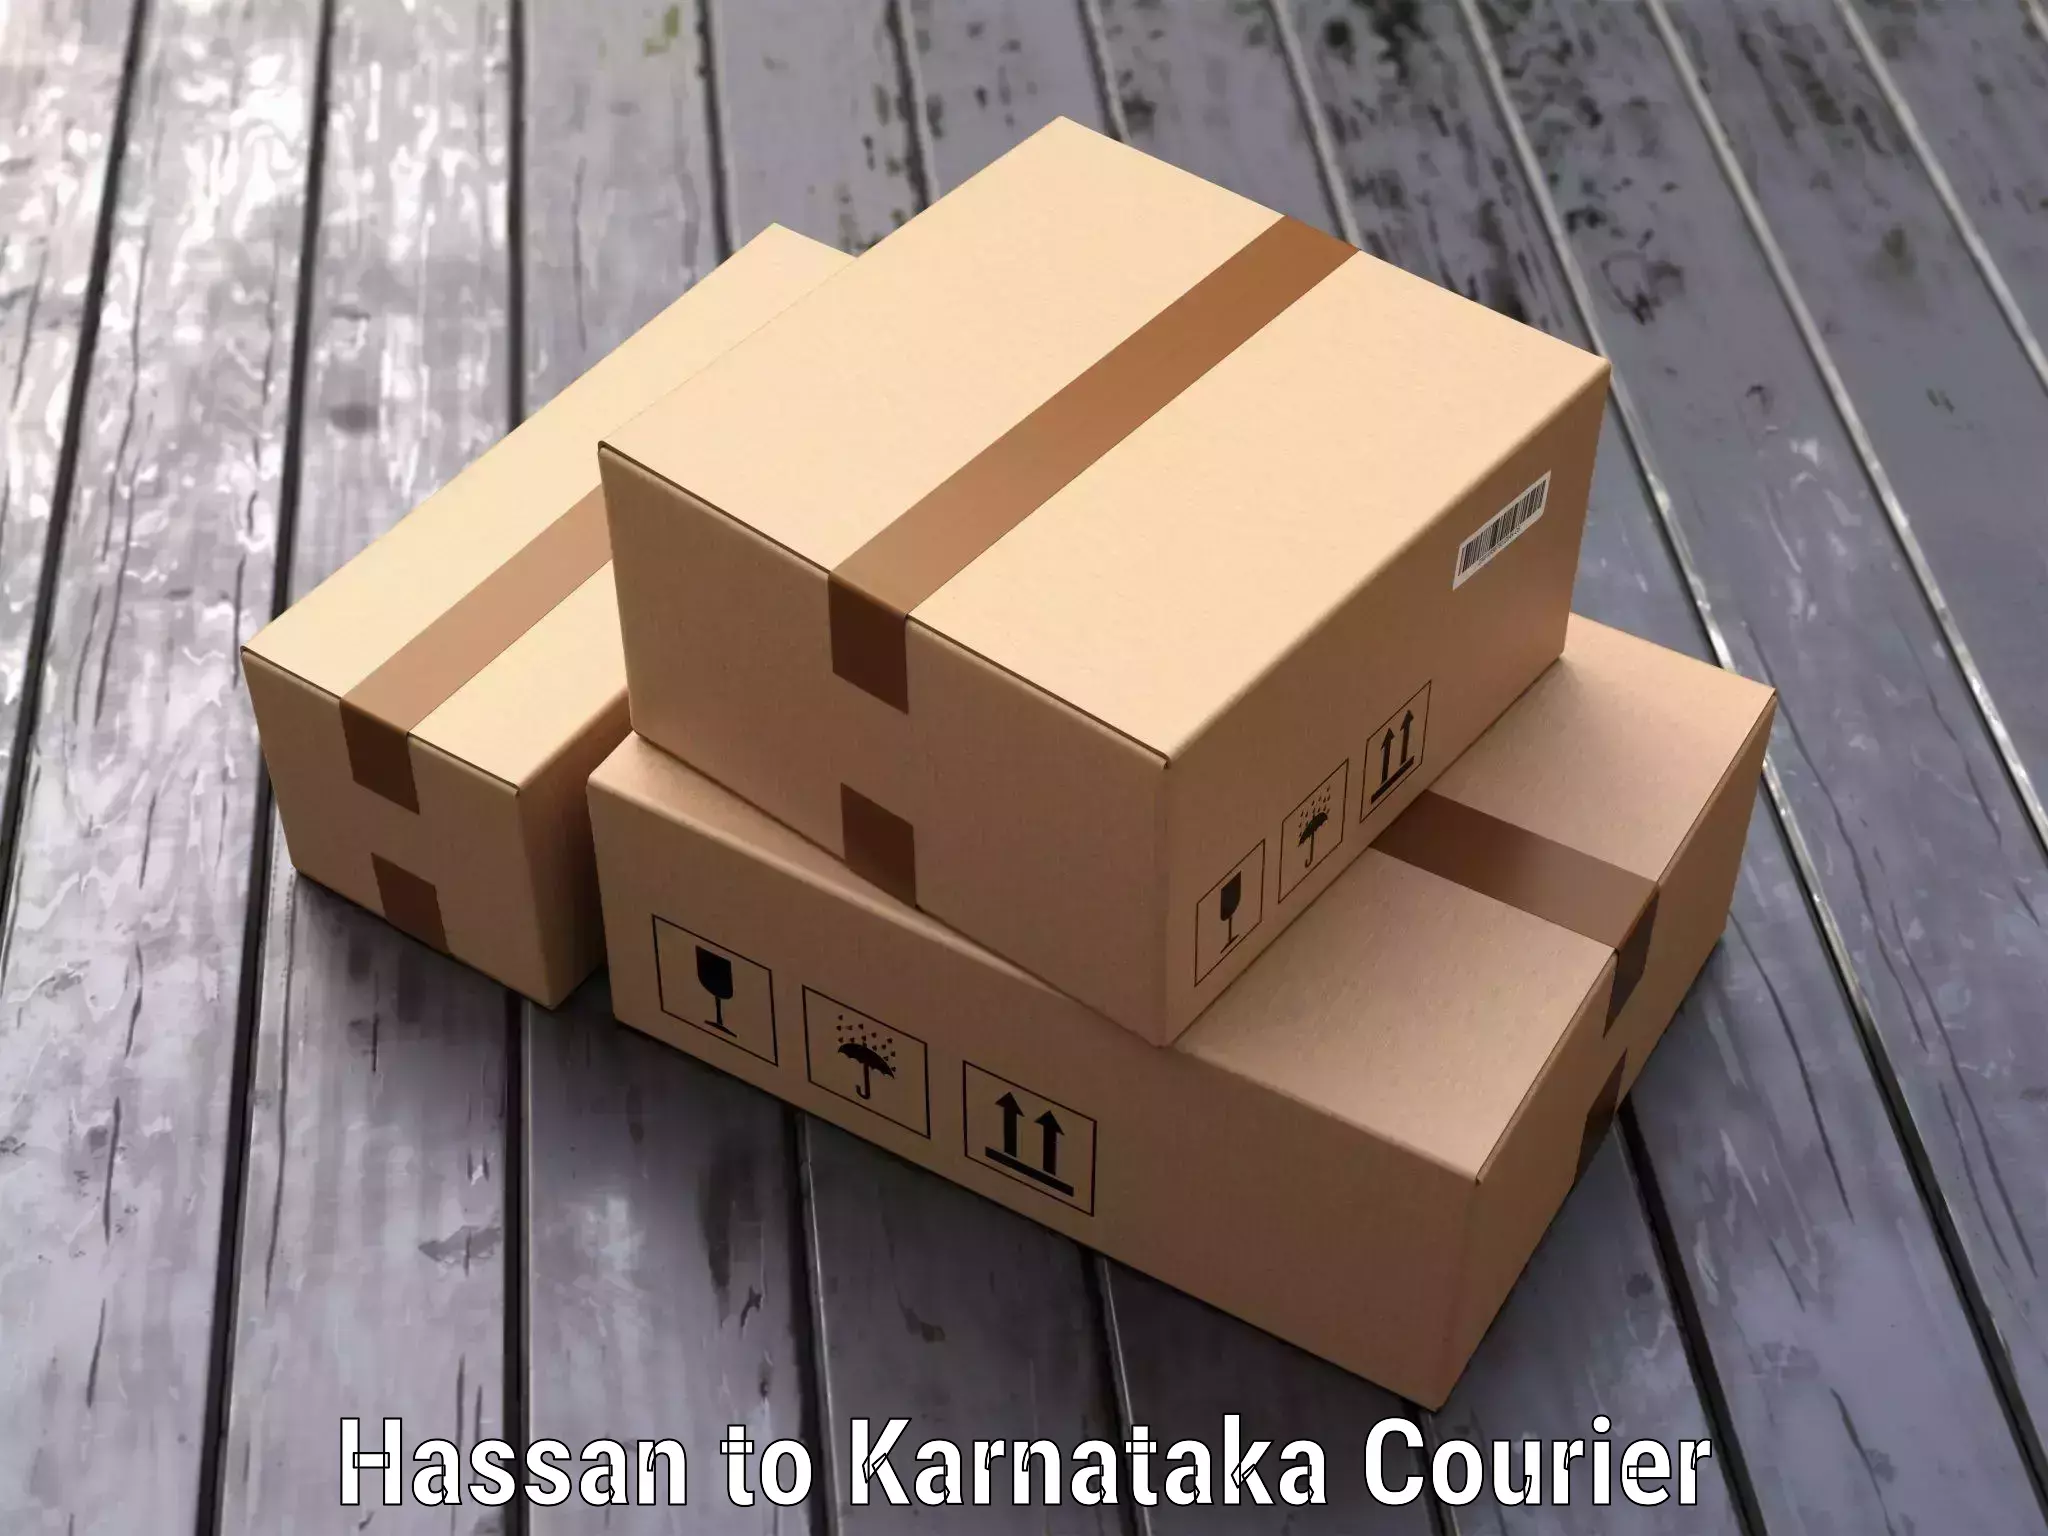 Luggage shipping specialists Hassan to Karnataka